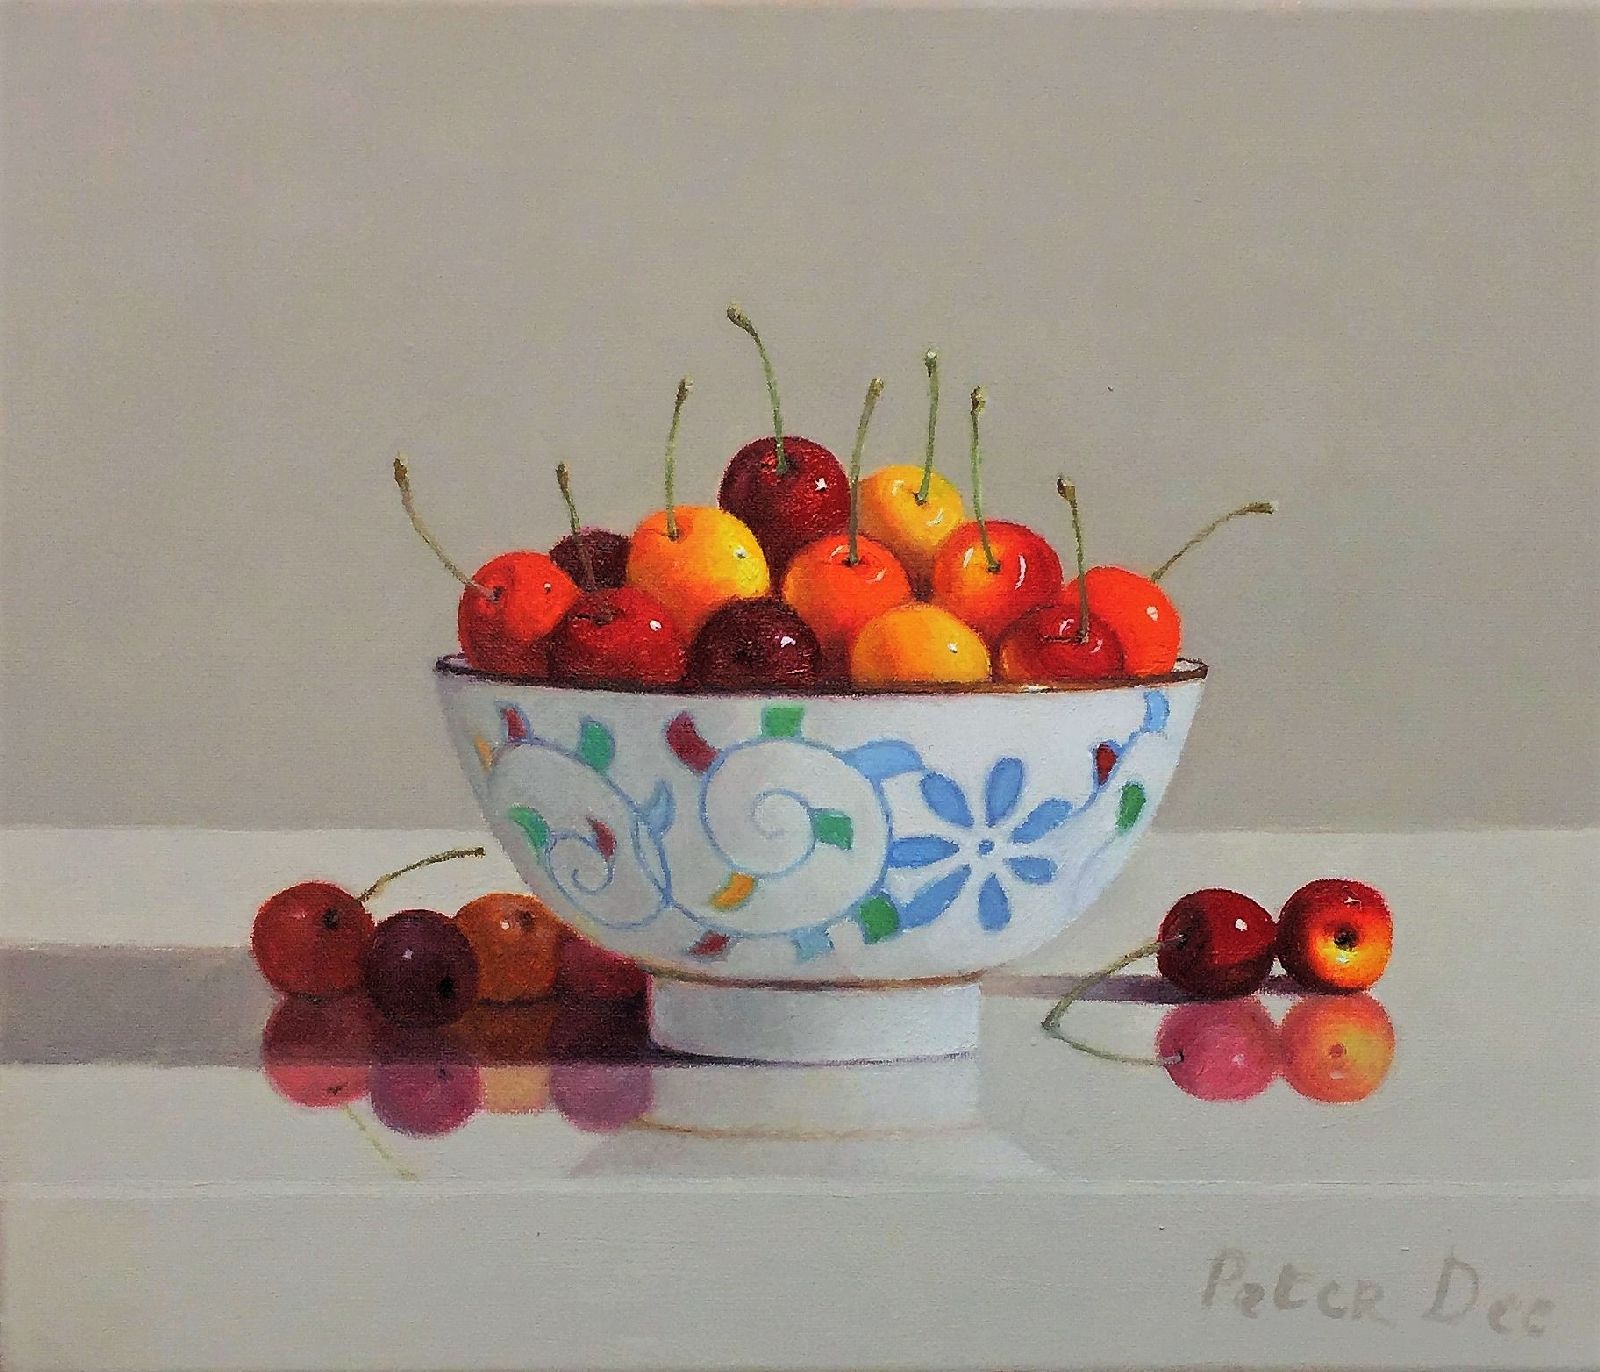 Peter Dee - Bowl of Rainier Cherries Still Life 